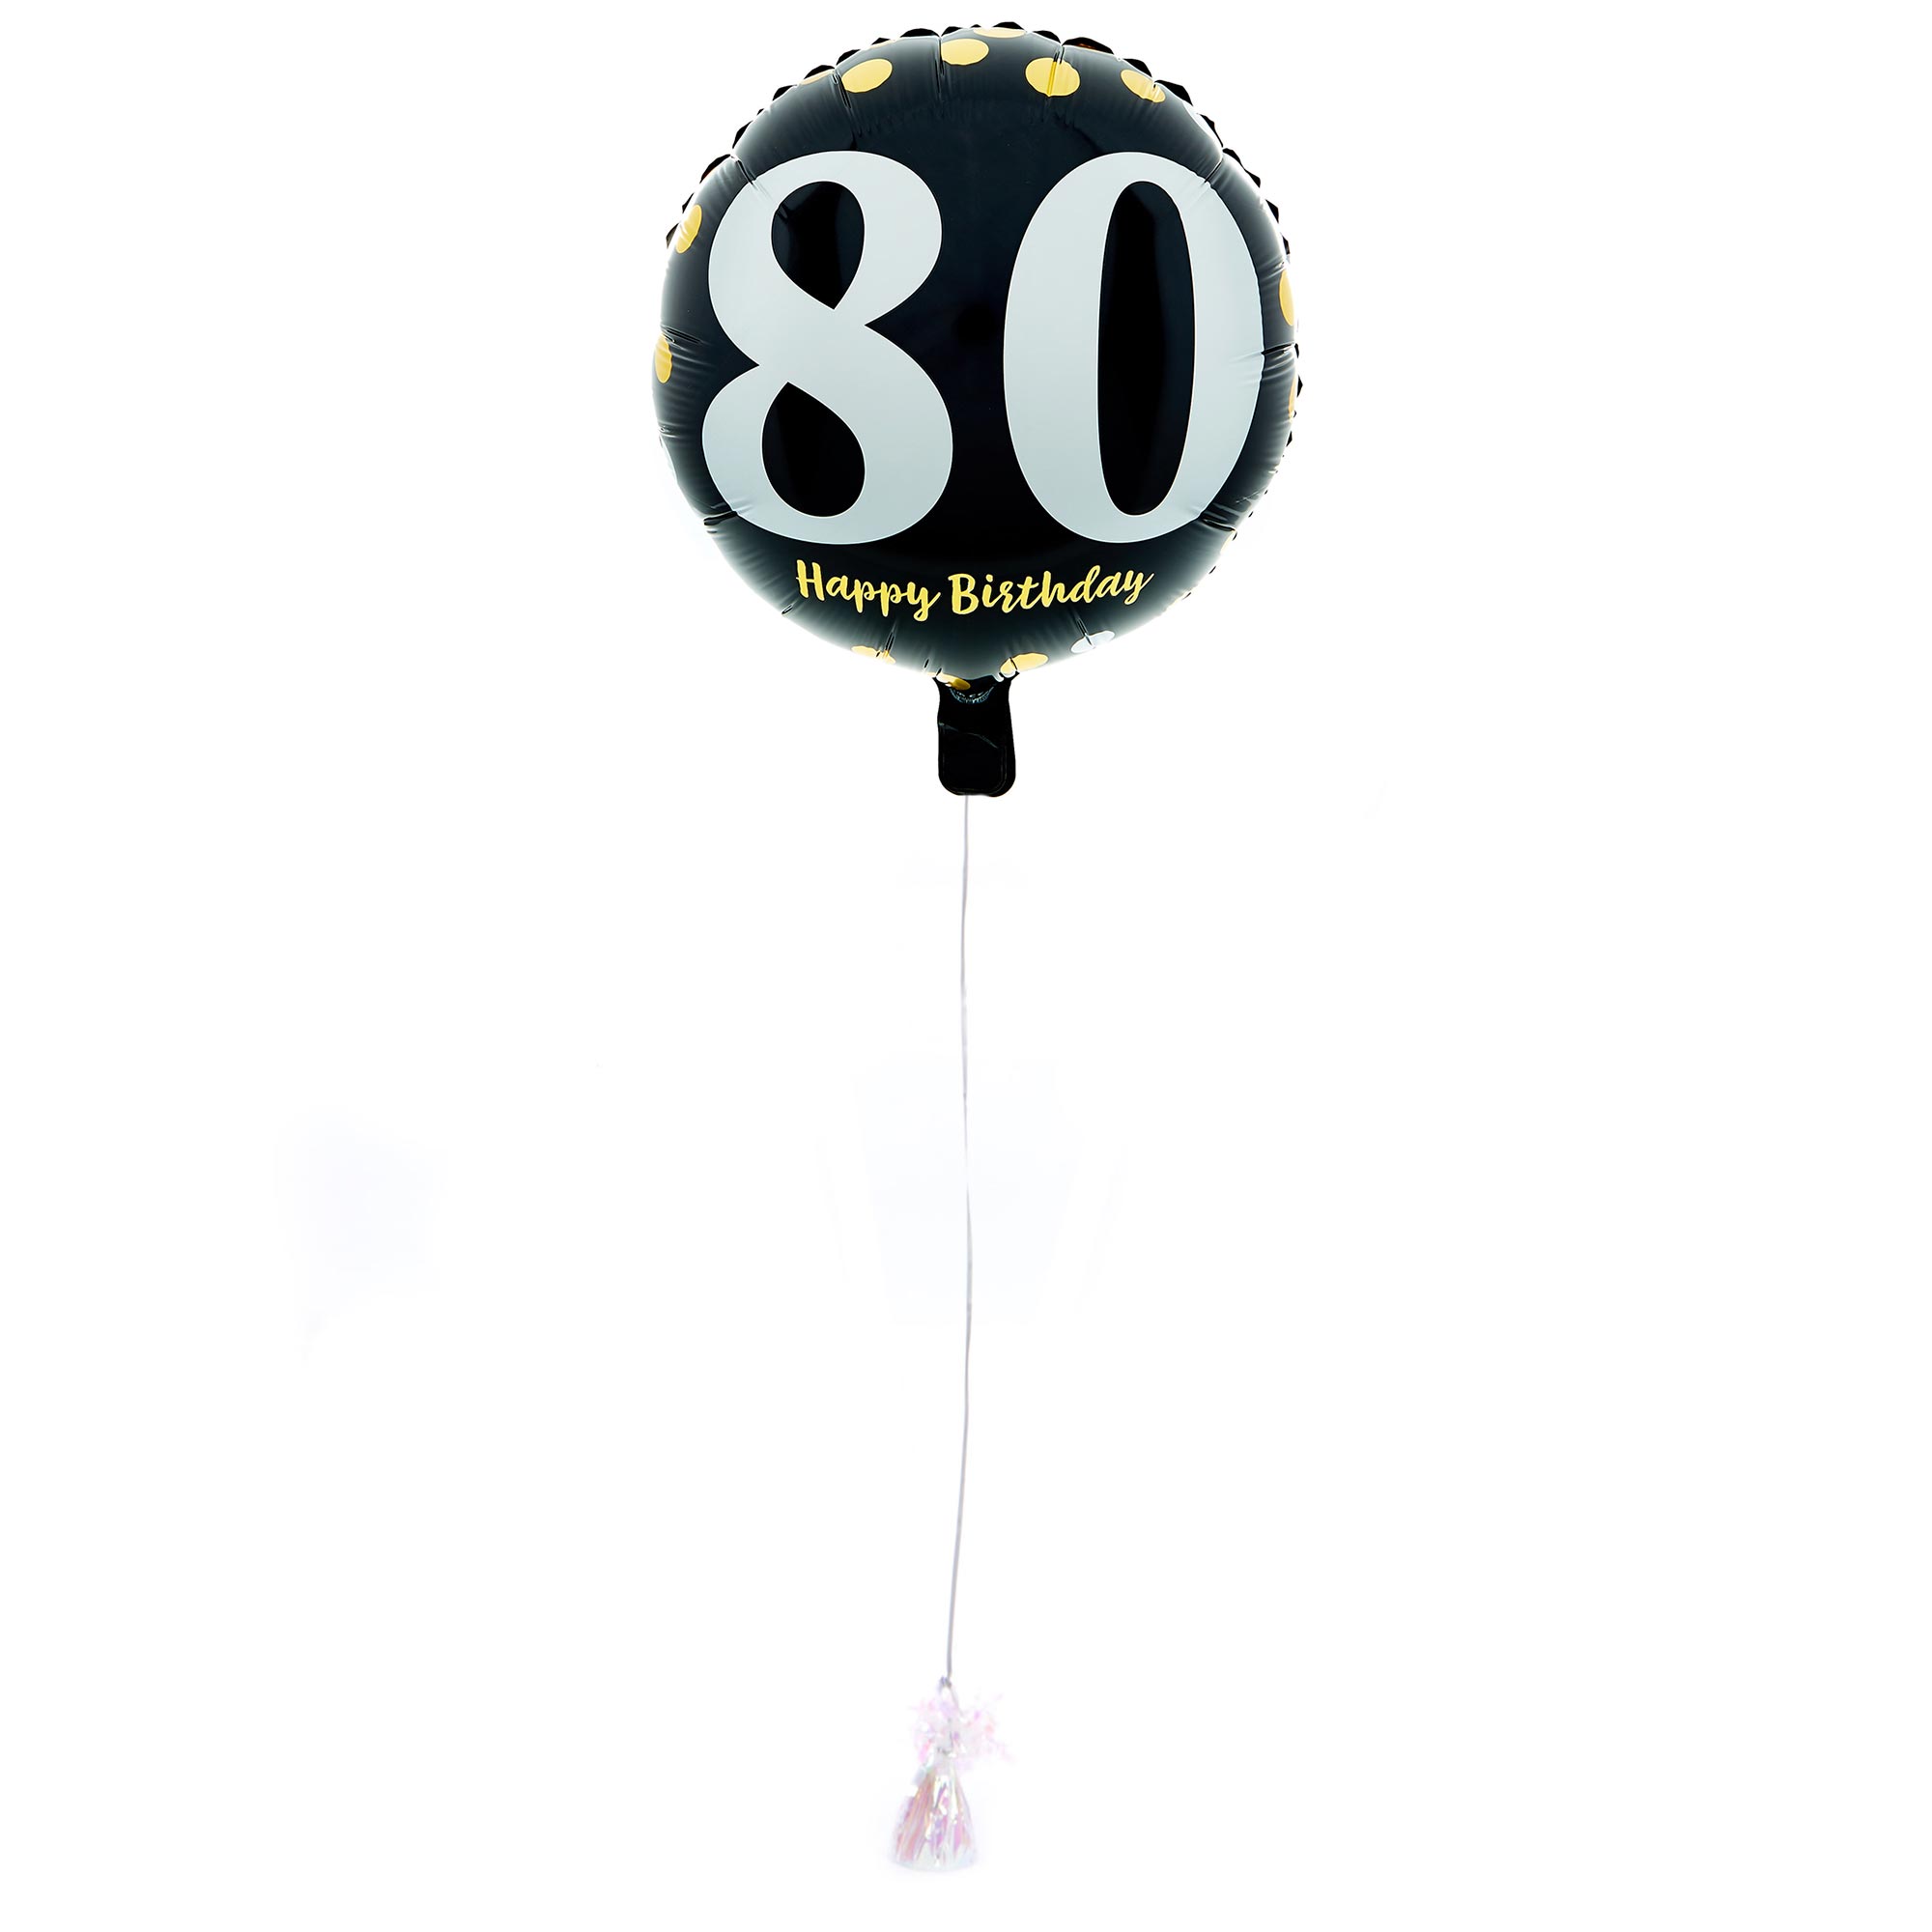 Happy 80th Birthday Balloon & Lindt Chocolate Box - FREE GIFT CARD!